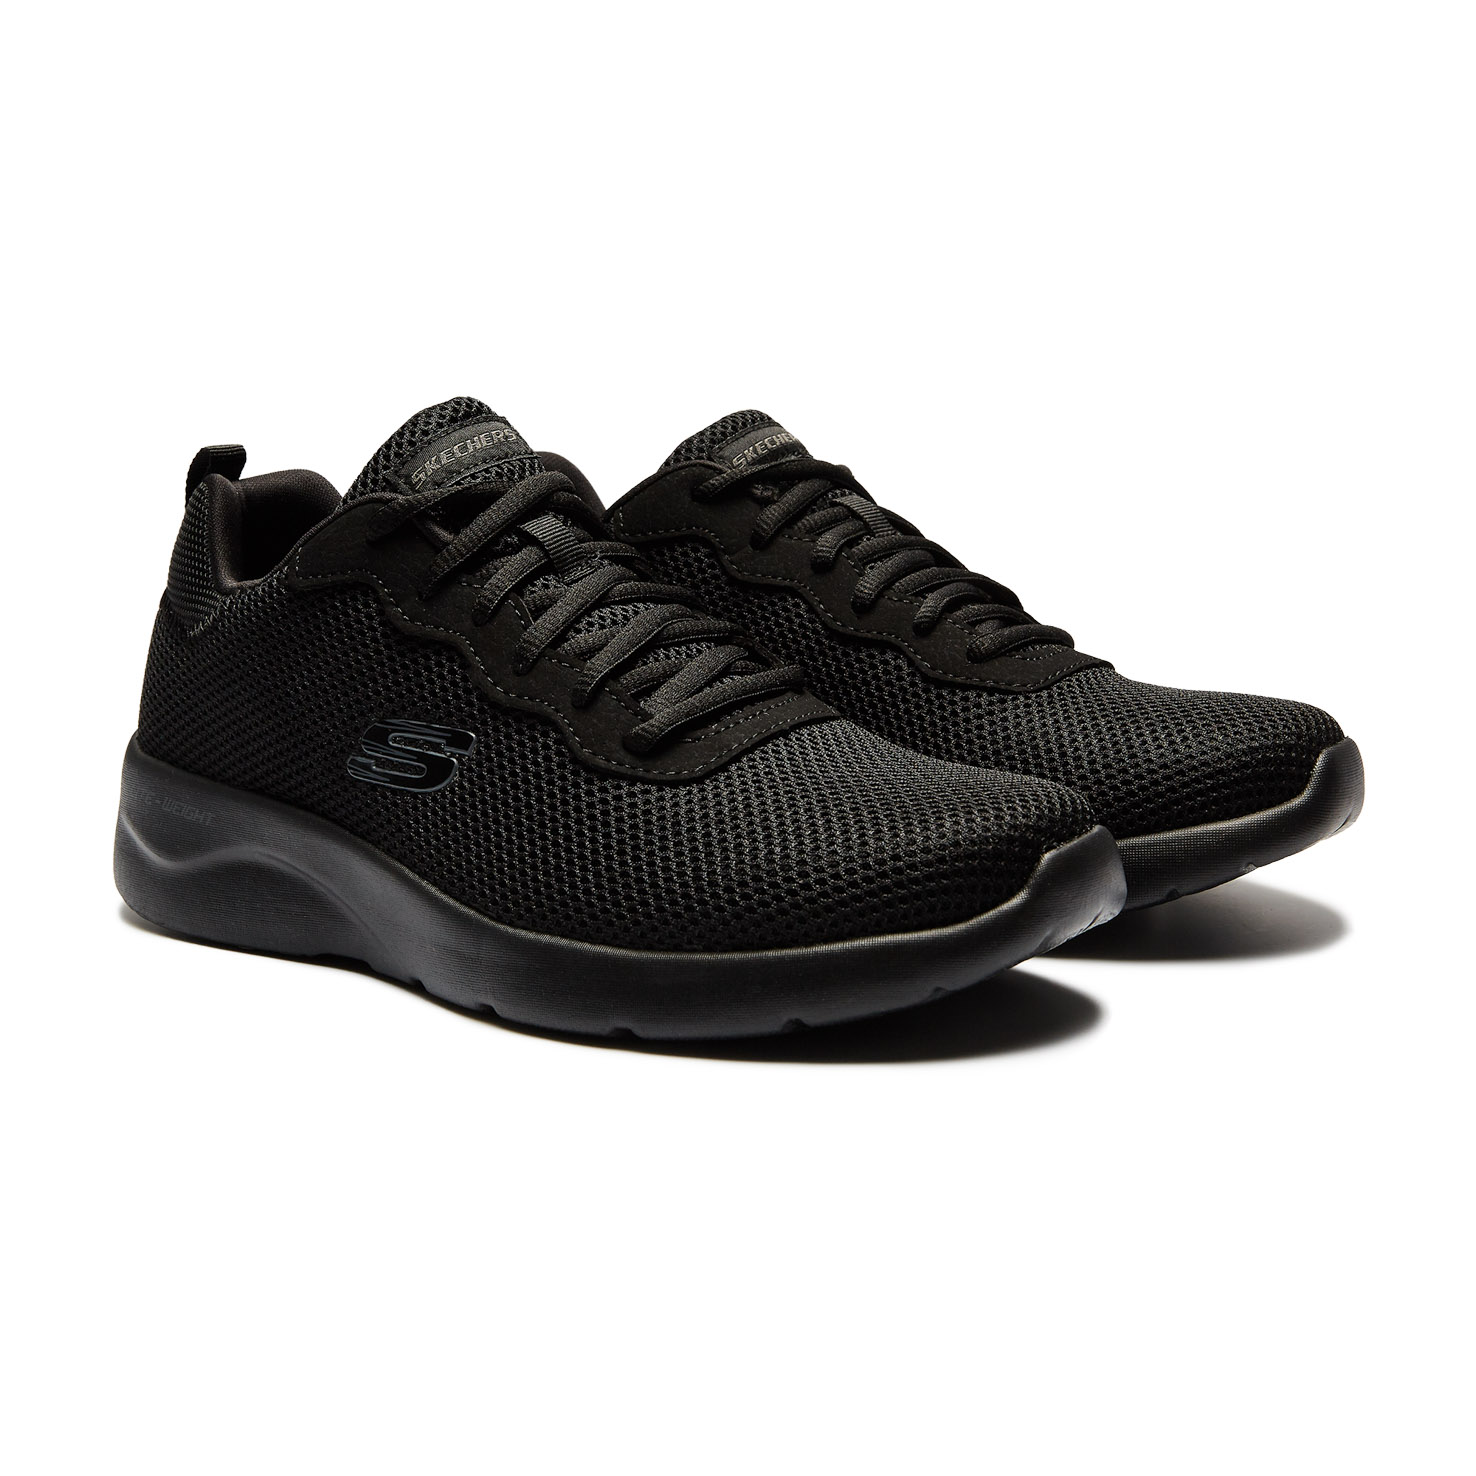 Men's low shoes SKECHERS, размер 40, цвет черный SK58362 - фото 2